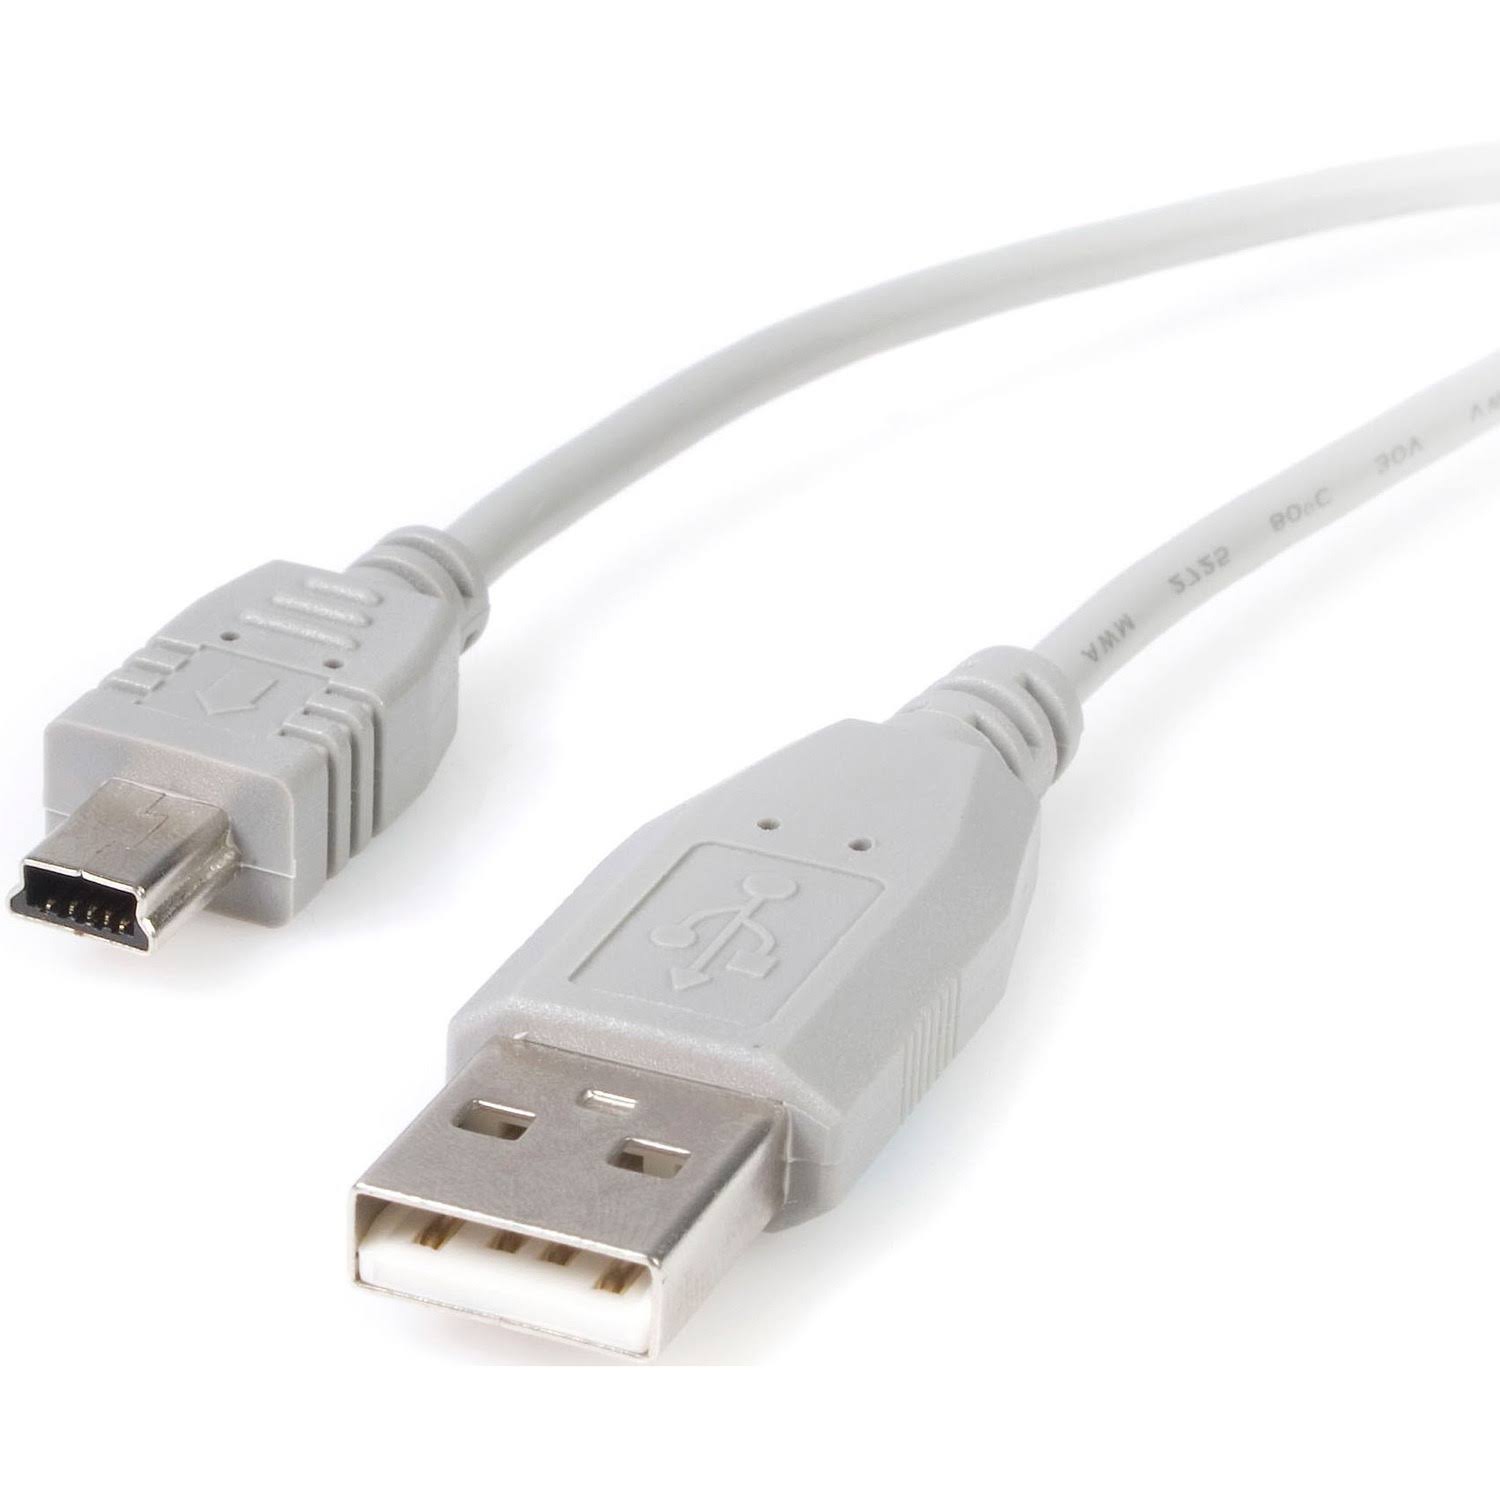 Startech Mini USB 2.0 Cable - 3'